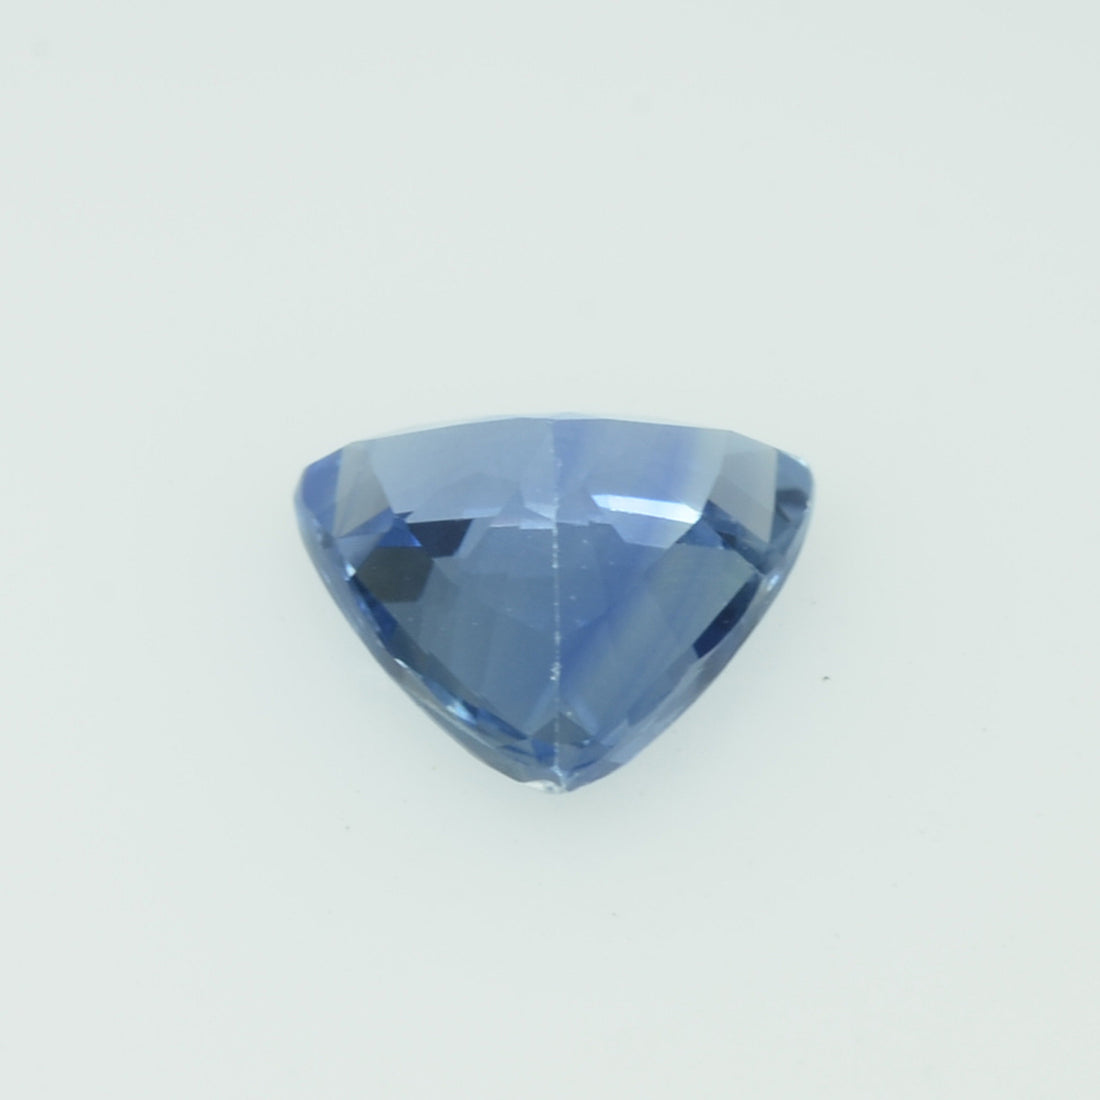 0.45 Cts Natural Blue Sapphire Loose Gemstone Trillion Cut - Thai Gems Export Ltd.